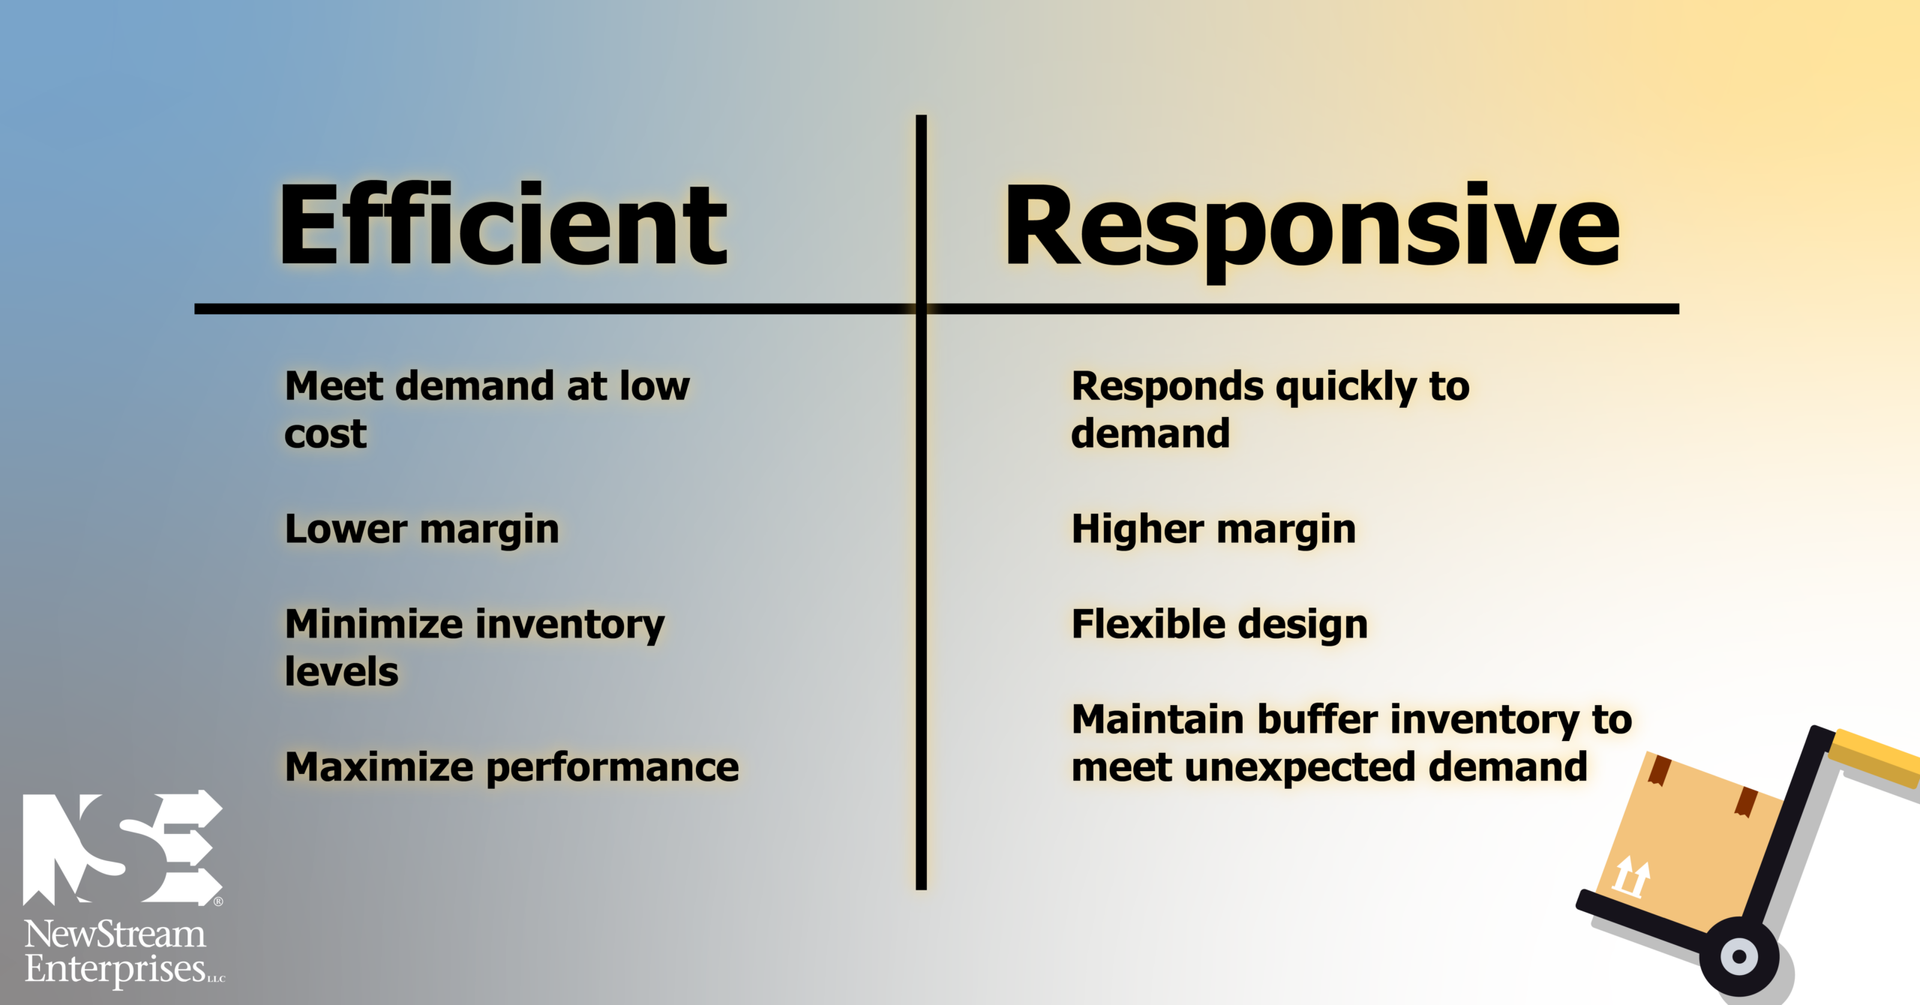 Efficient vs Responsive Supply Chain